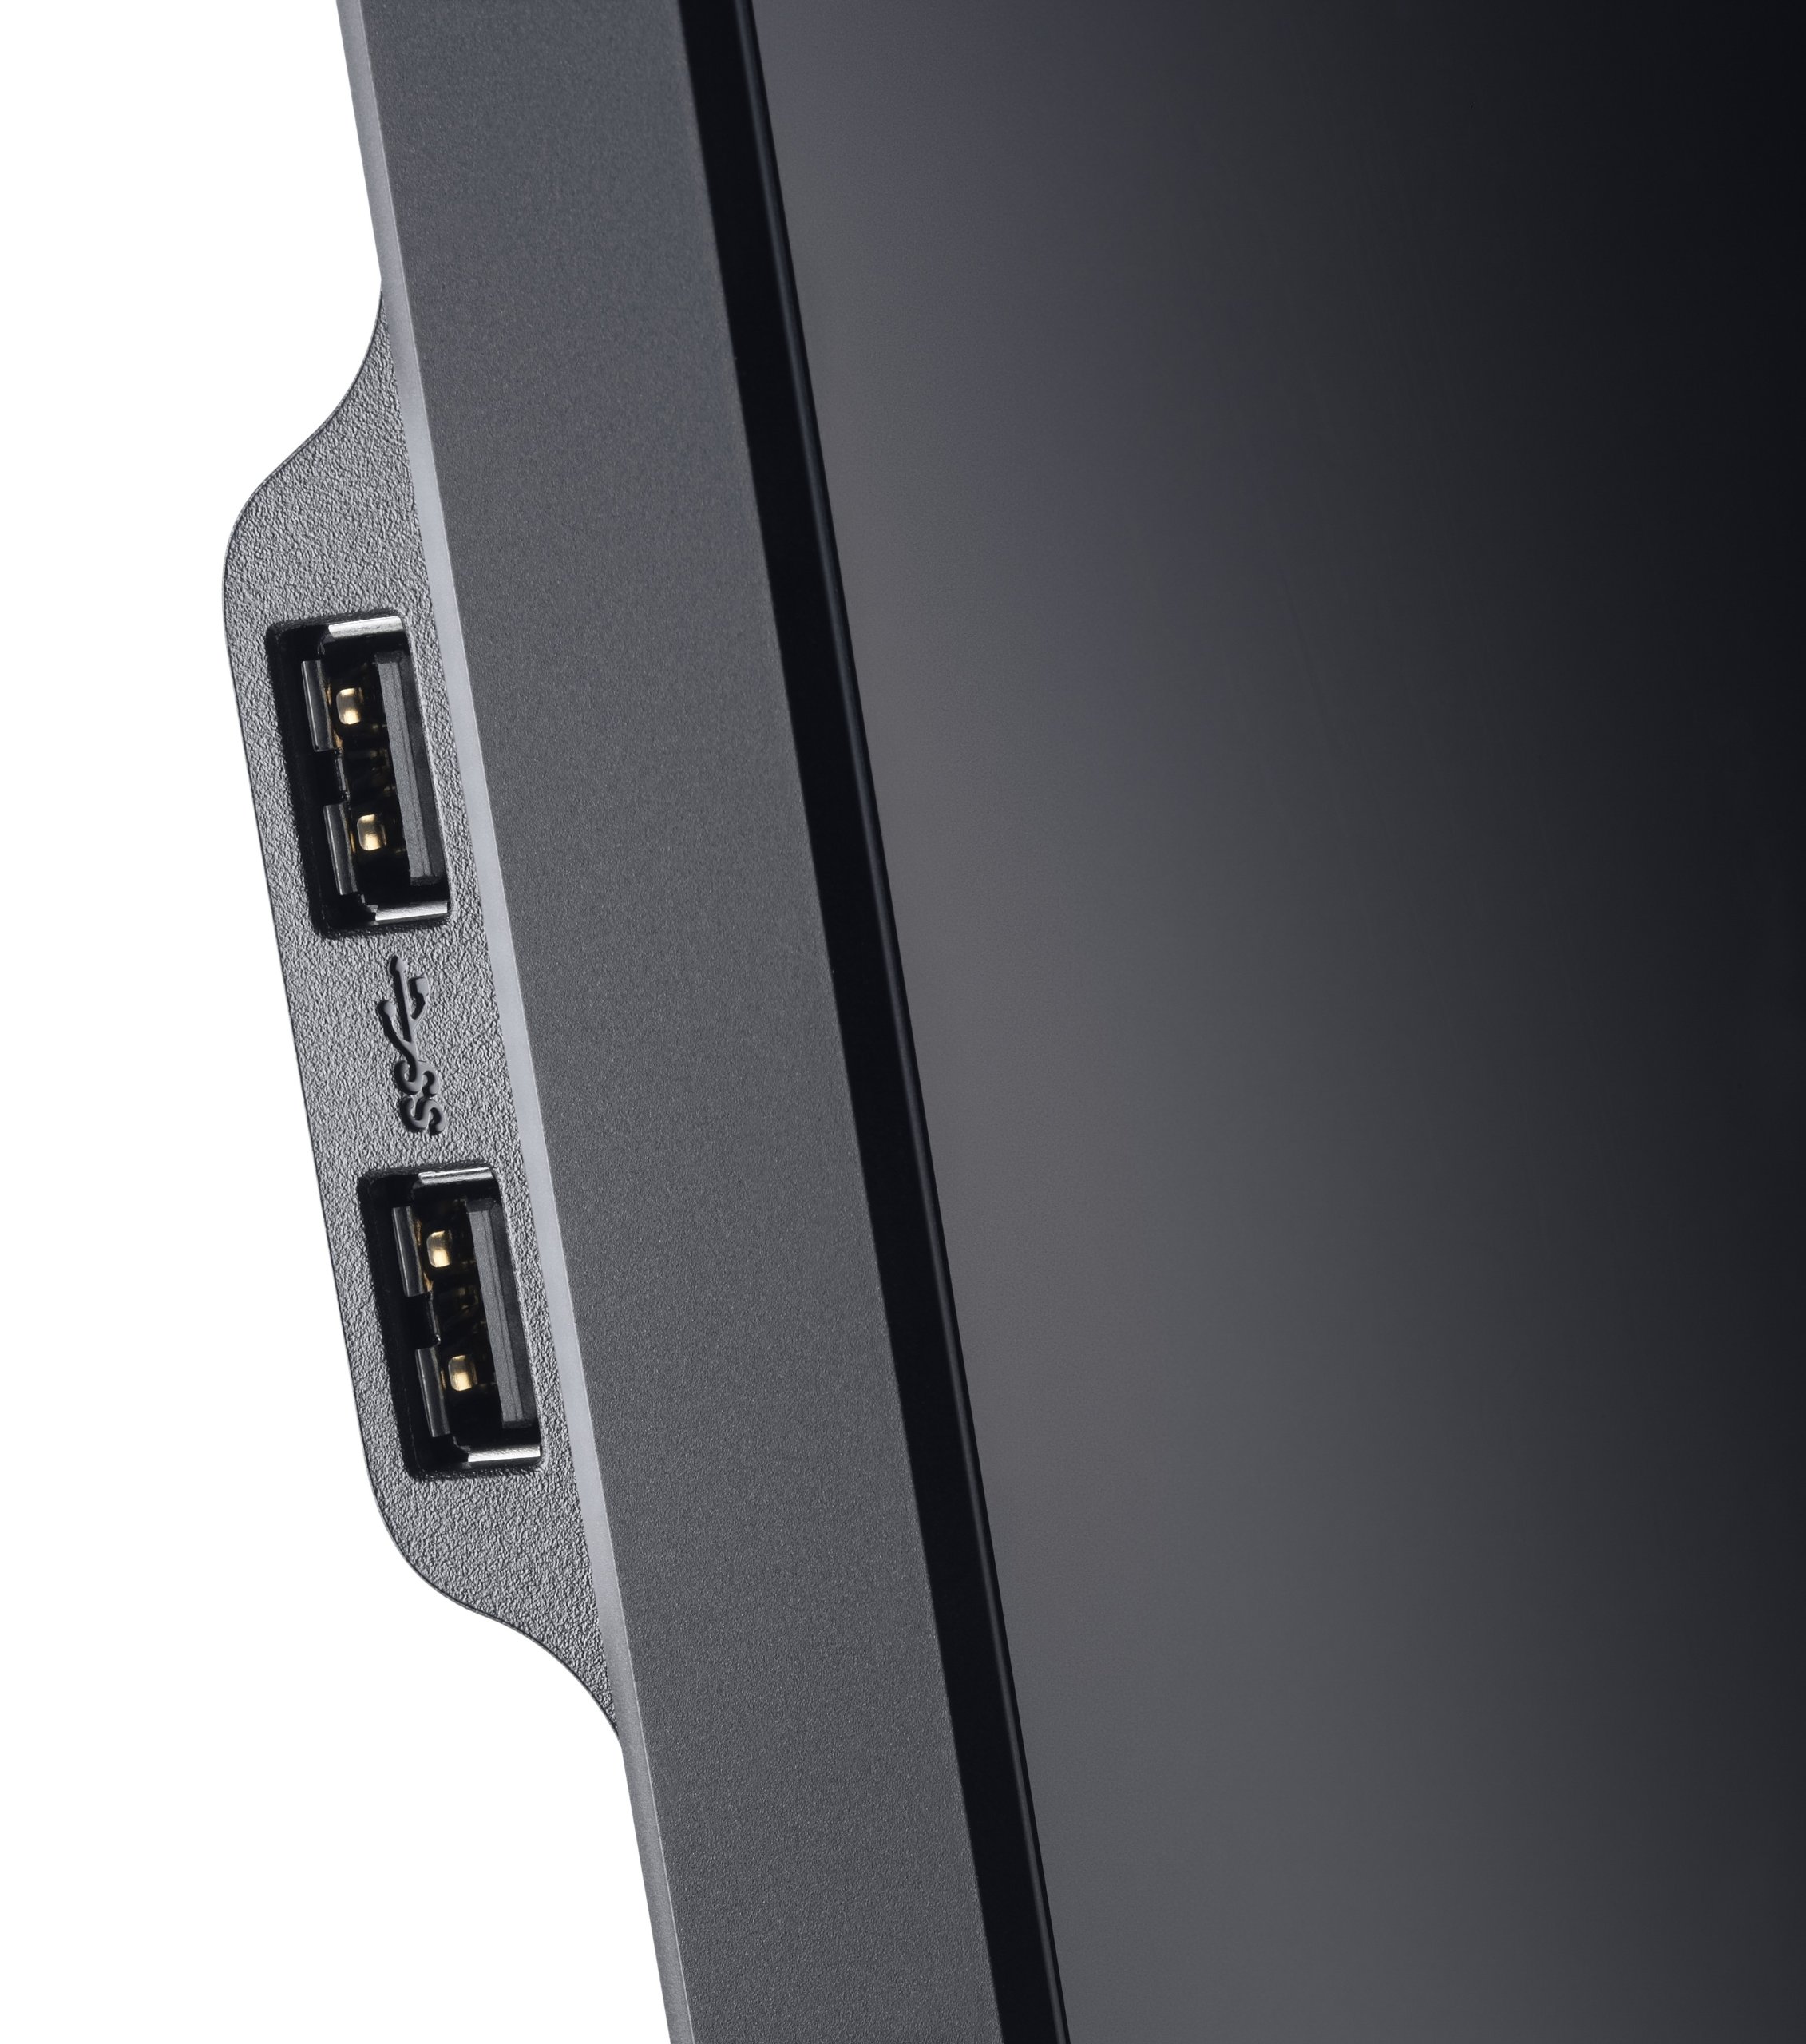 Dell UltraSharp U2913WM 29-Inch 21:9 Widescreen 2560 x 1080 LED-Lit Monitor